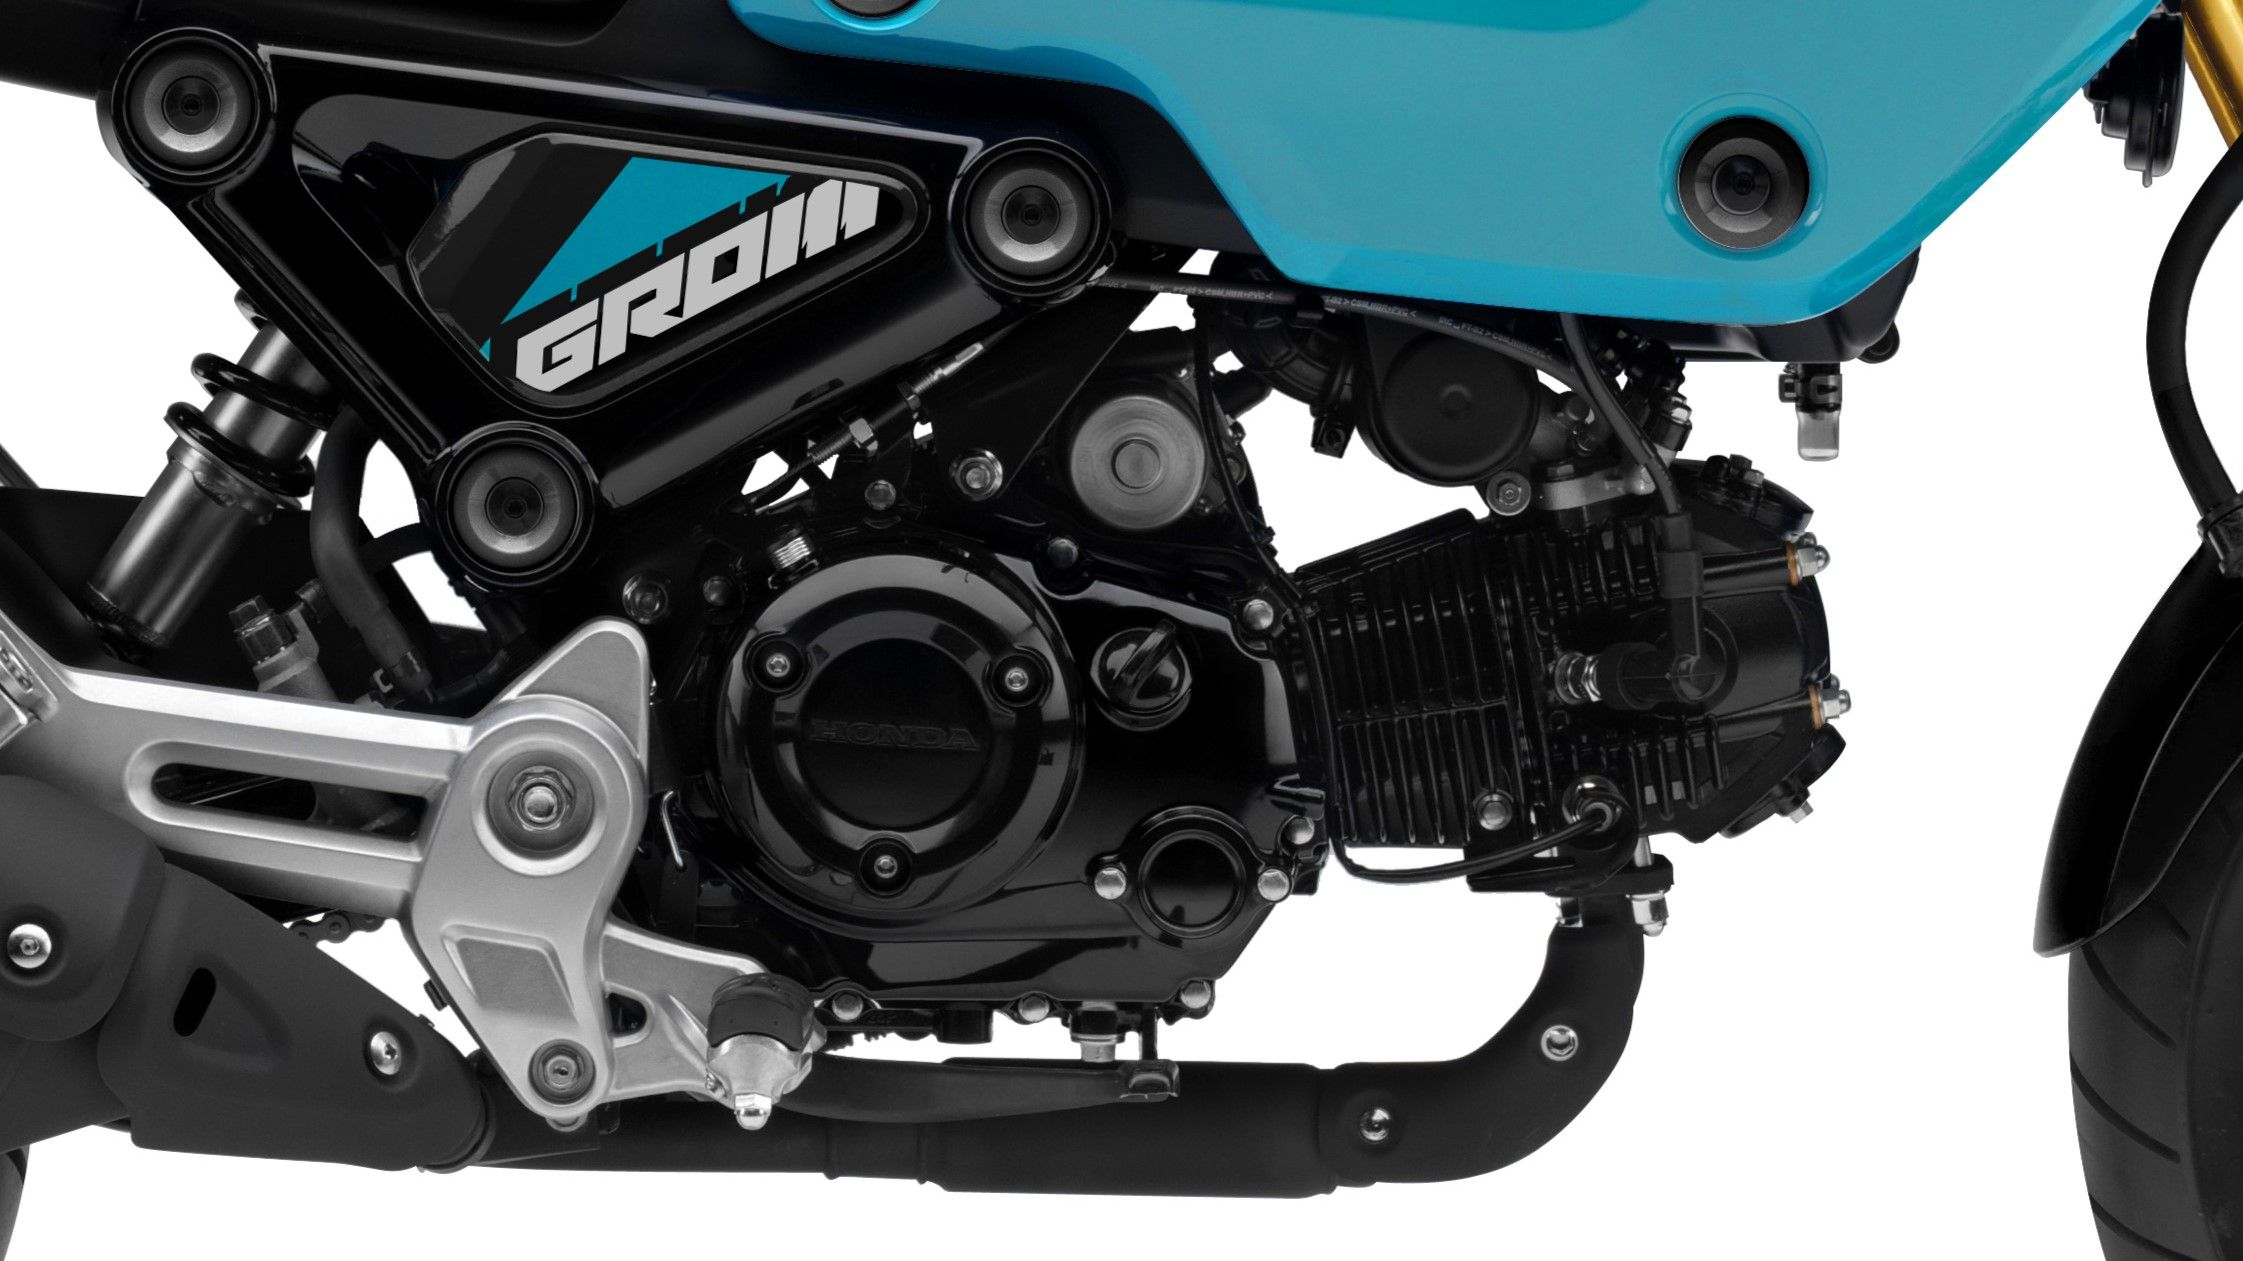 Honda Grom Engine